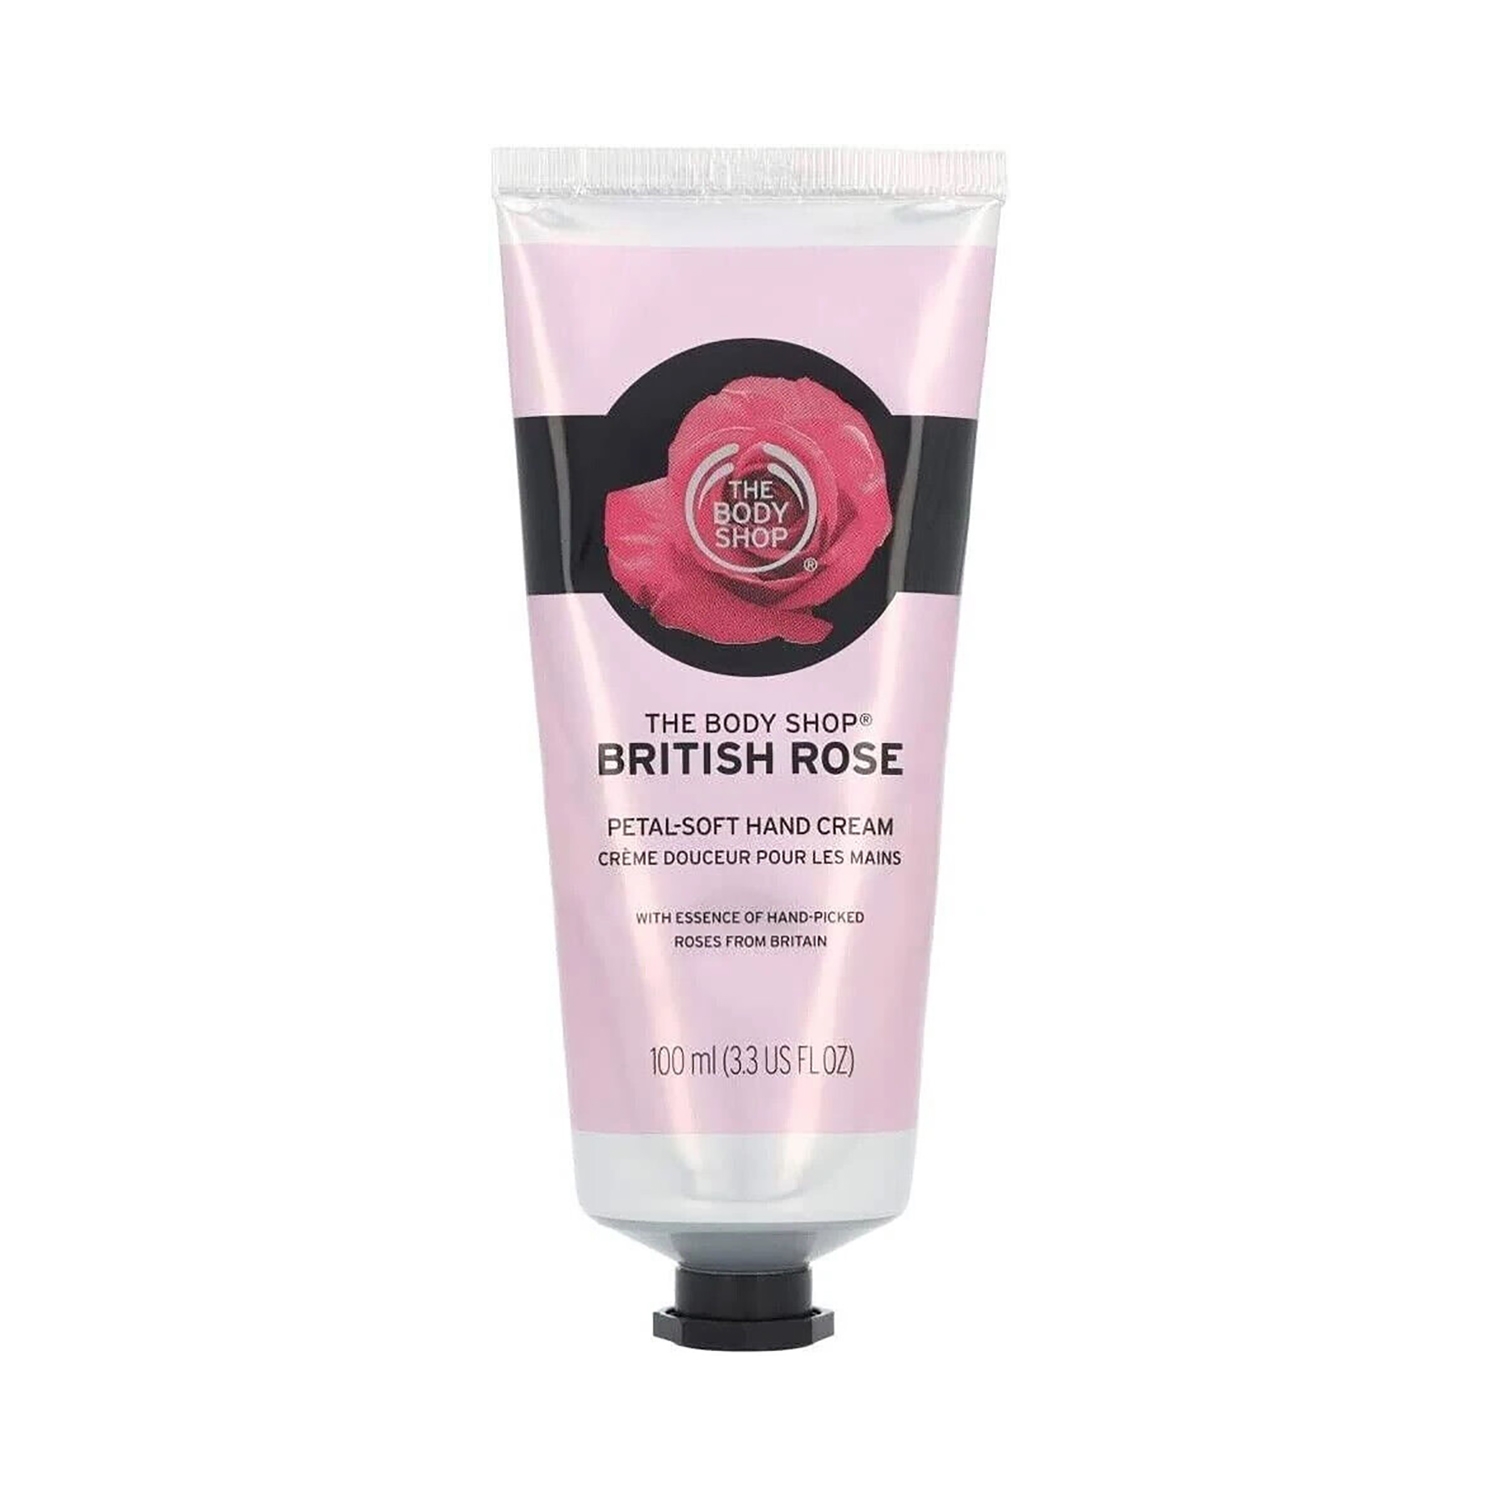 The Body Shop | The Body Shop British Rose Hand Cream (100ml)